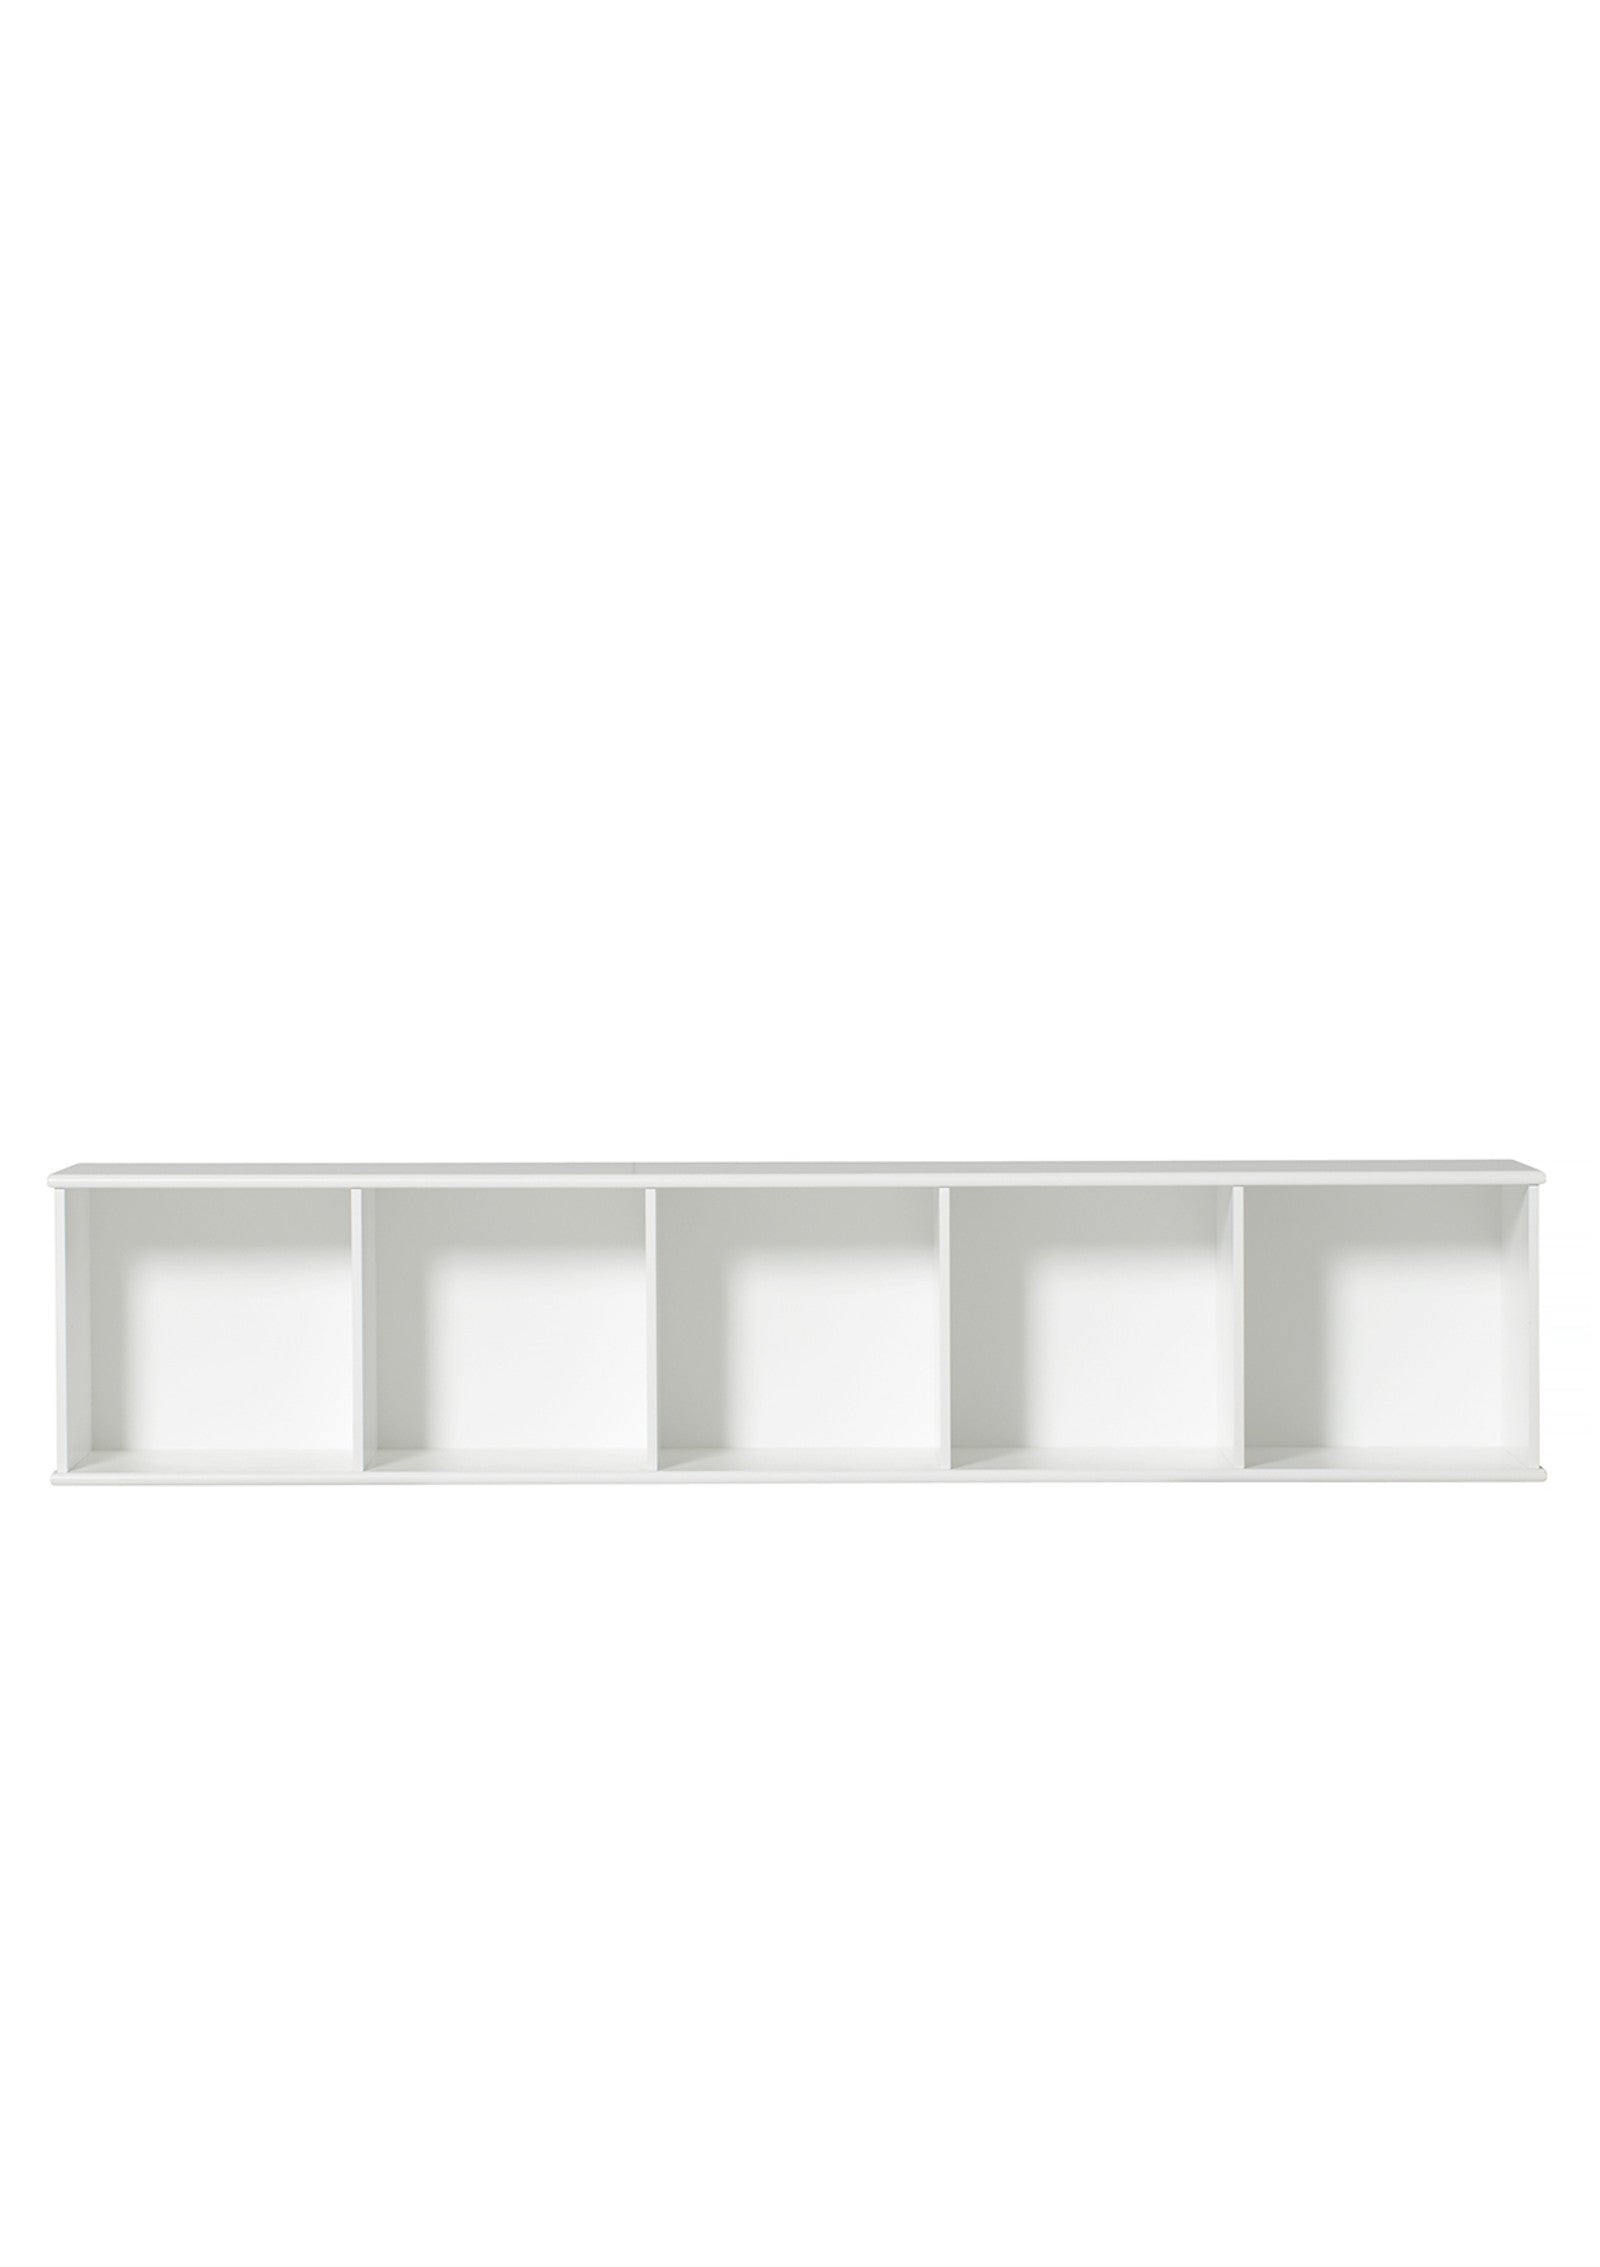 'Wood' Standregal horizontal 5 x 1 / weiß zum Aufhängen